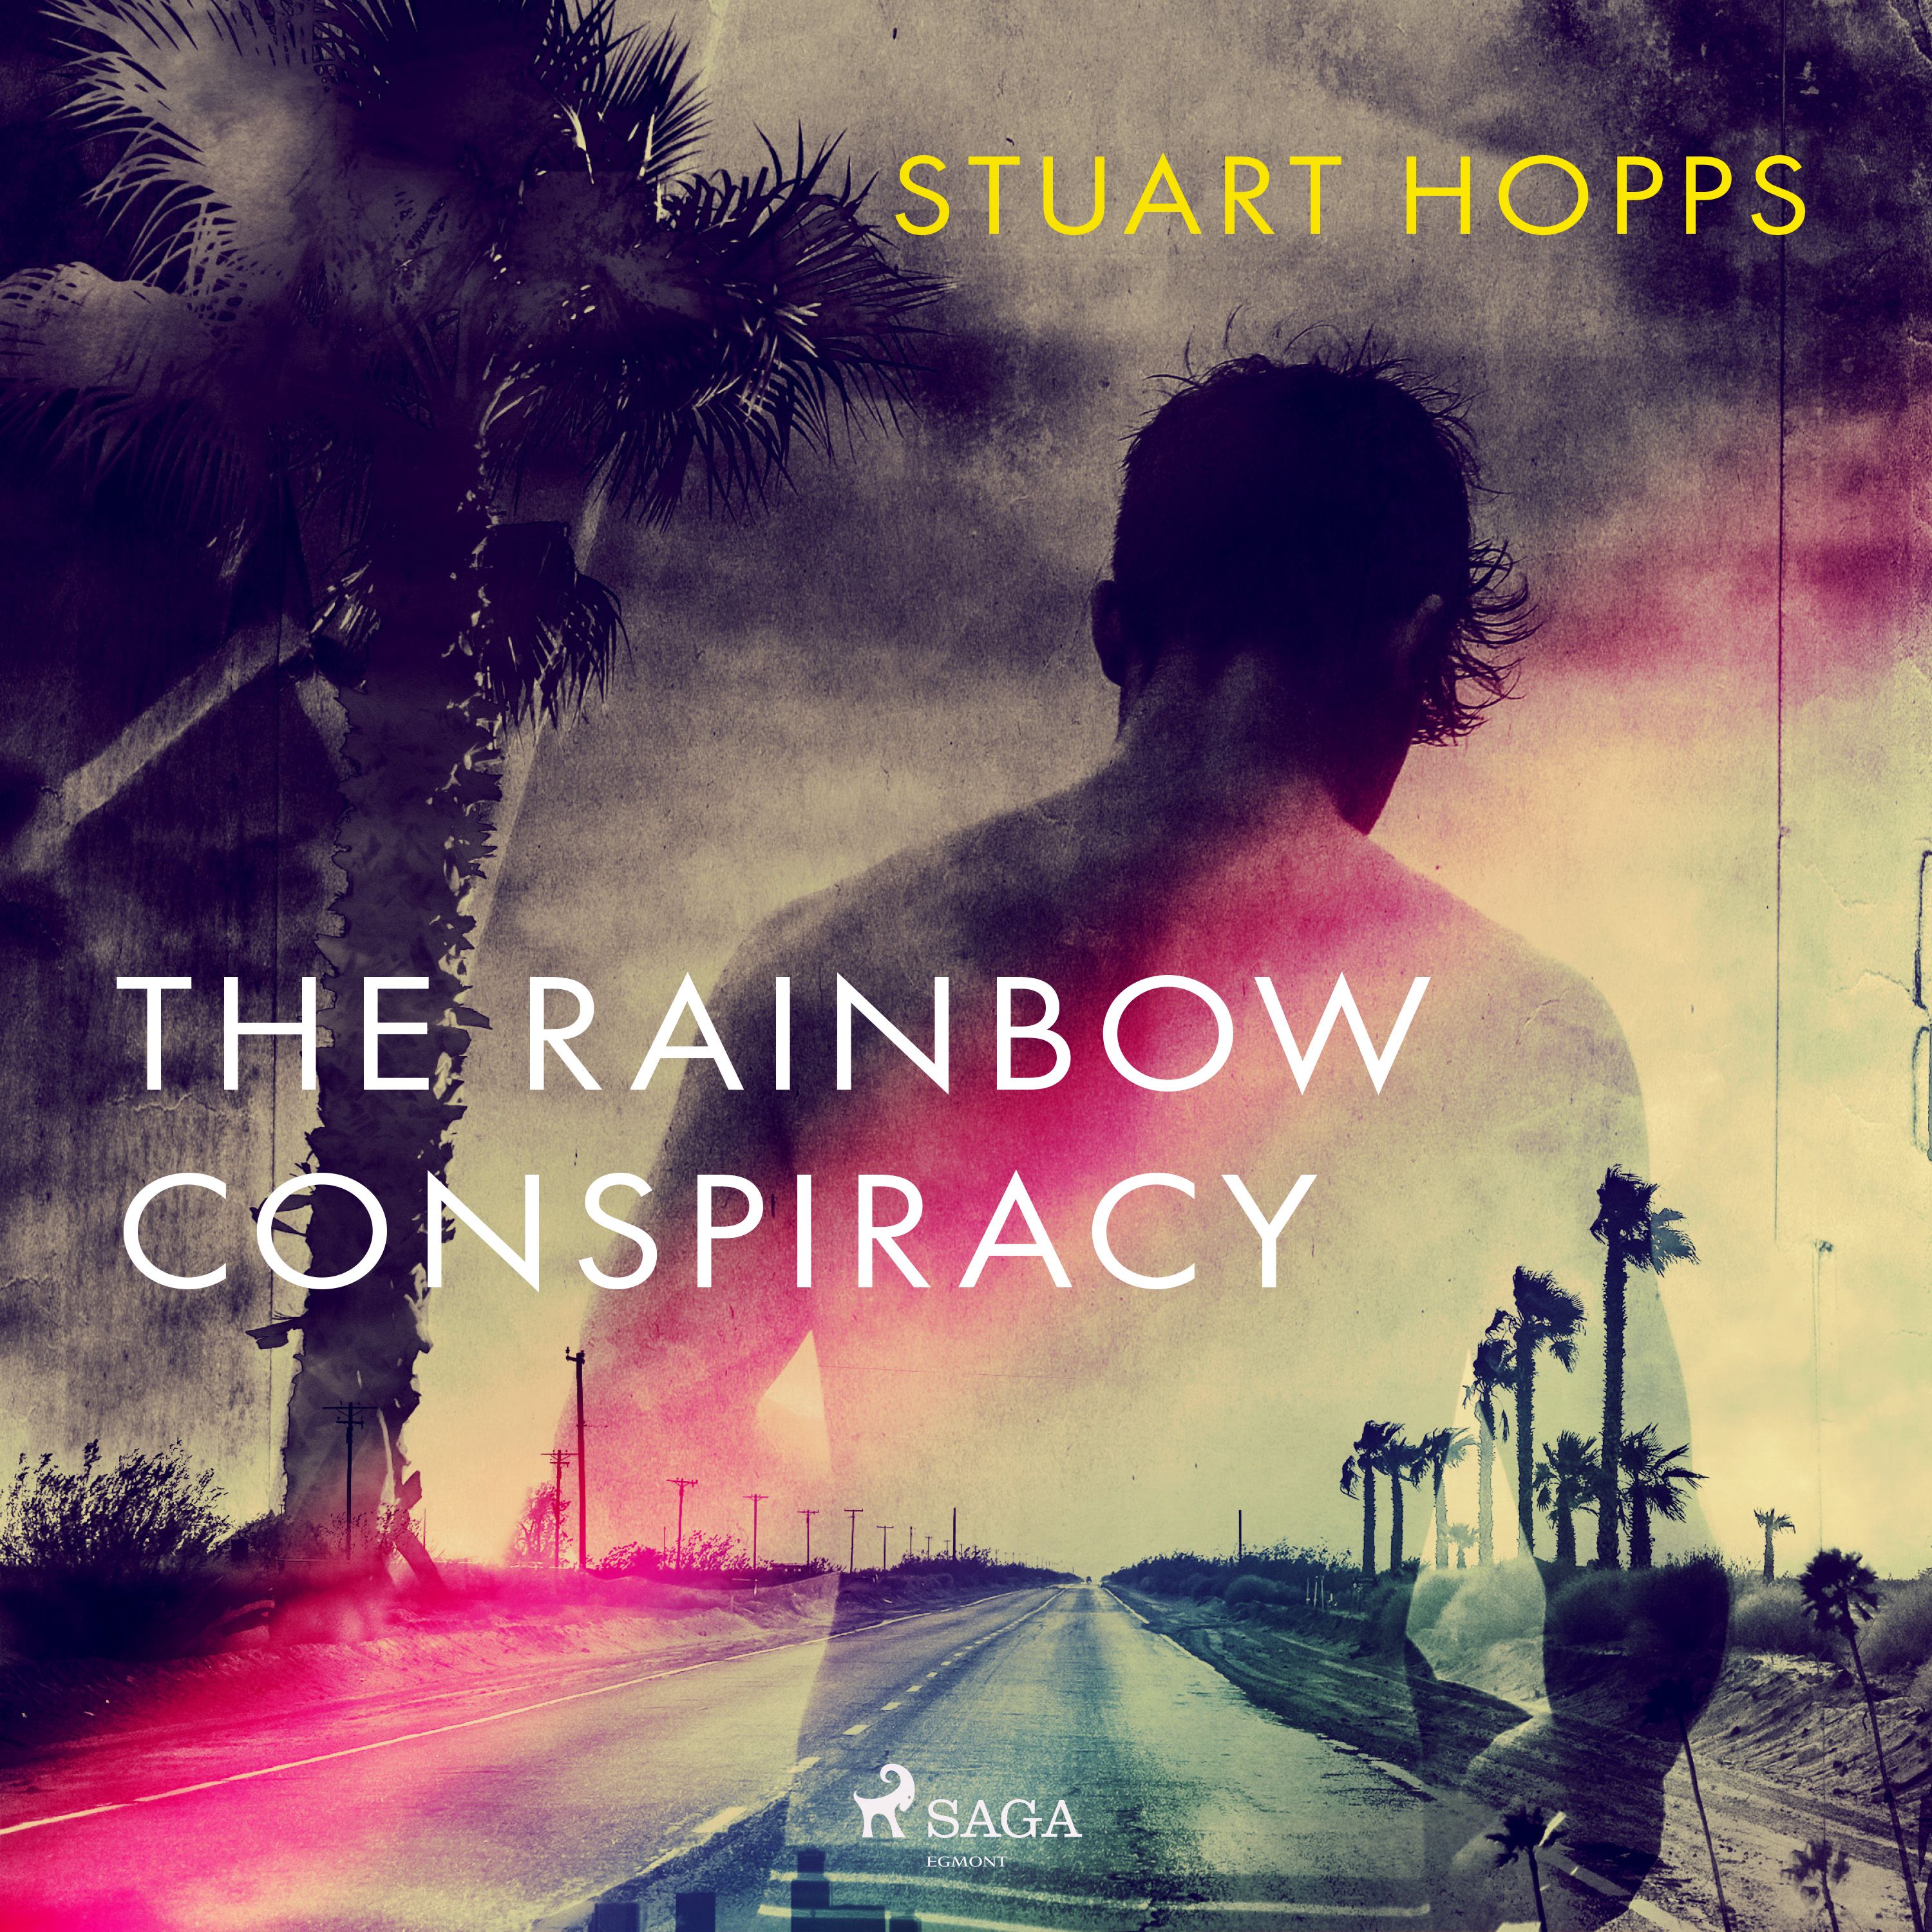 The Rainbow Conspiracy, ljudbok av Stuart Hopps